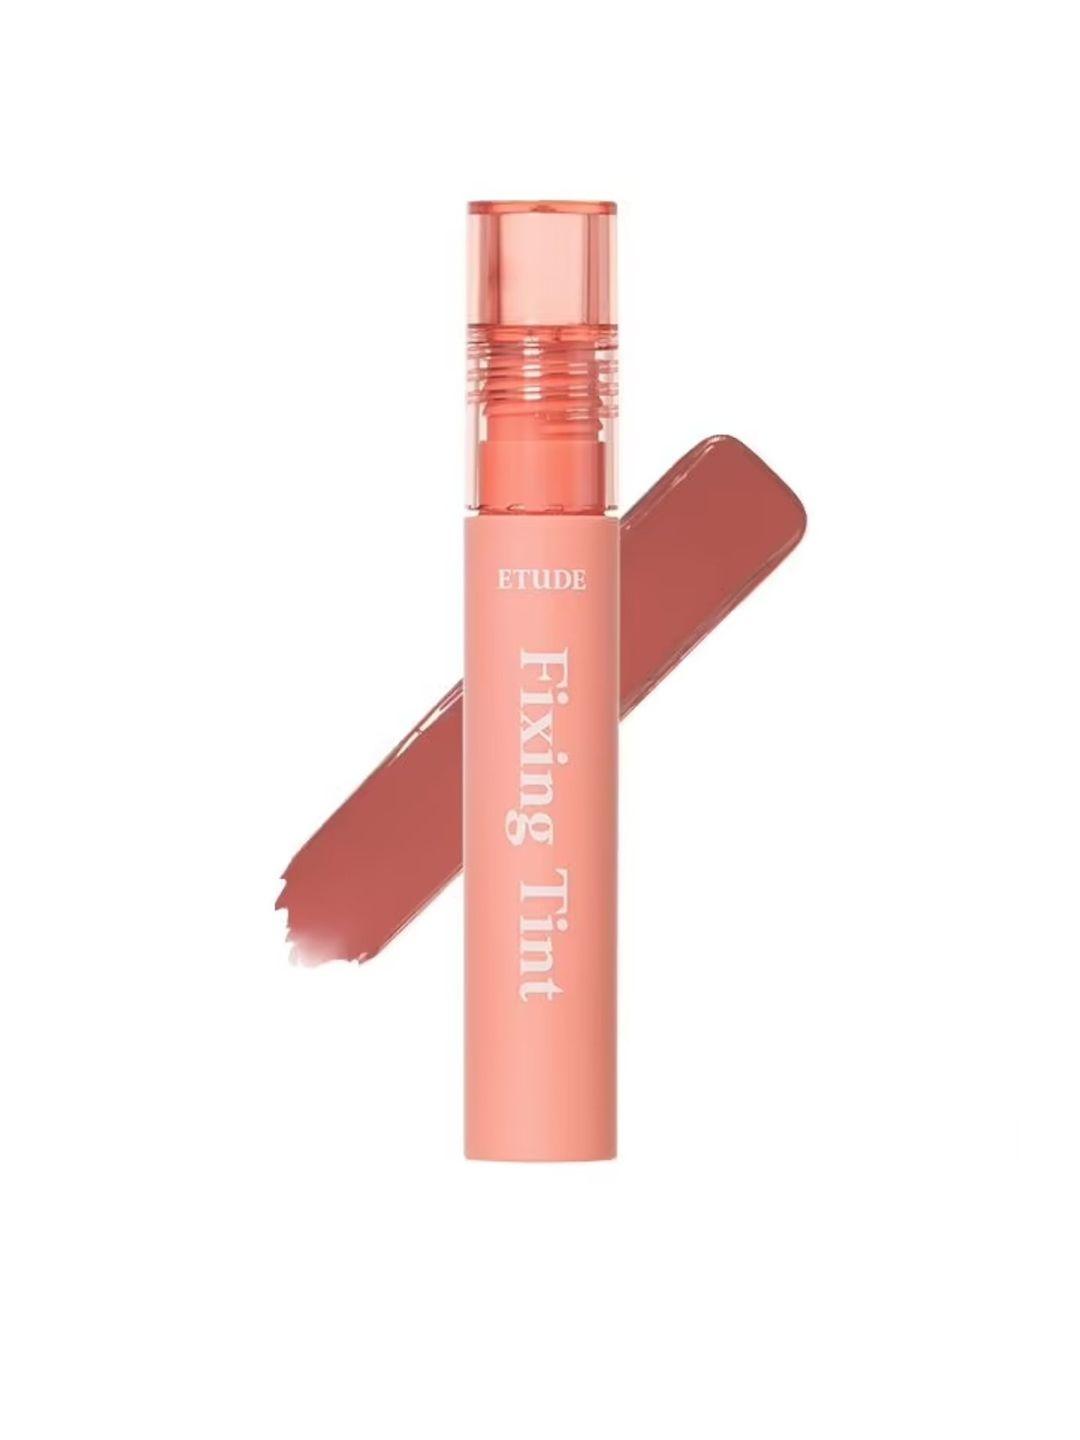 etude-fixing-tint-hydrating-matte-finish-lipstick---mellow-peach-03